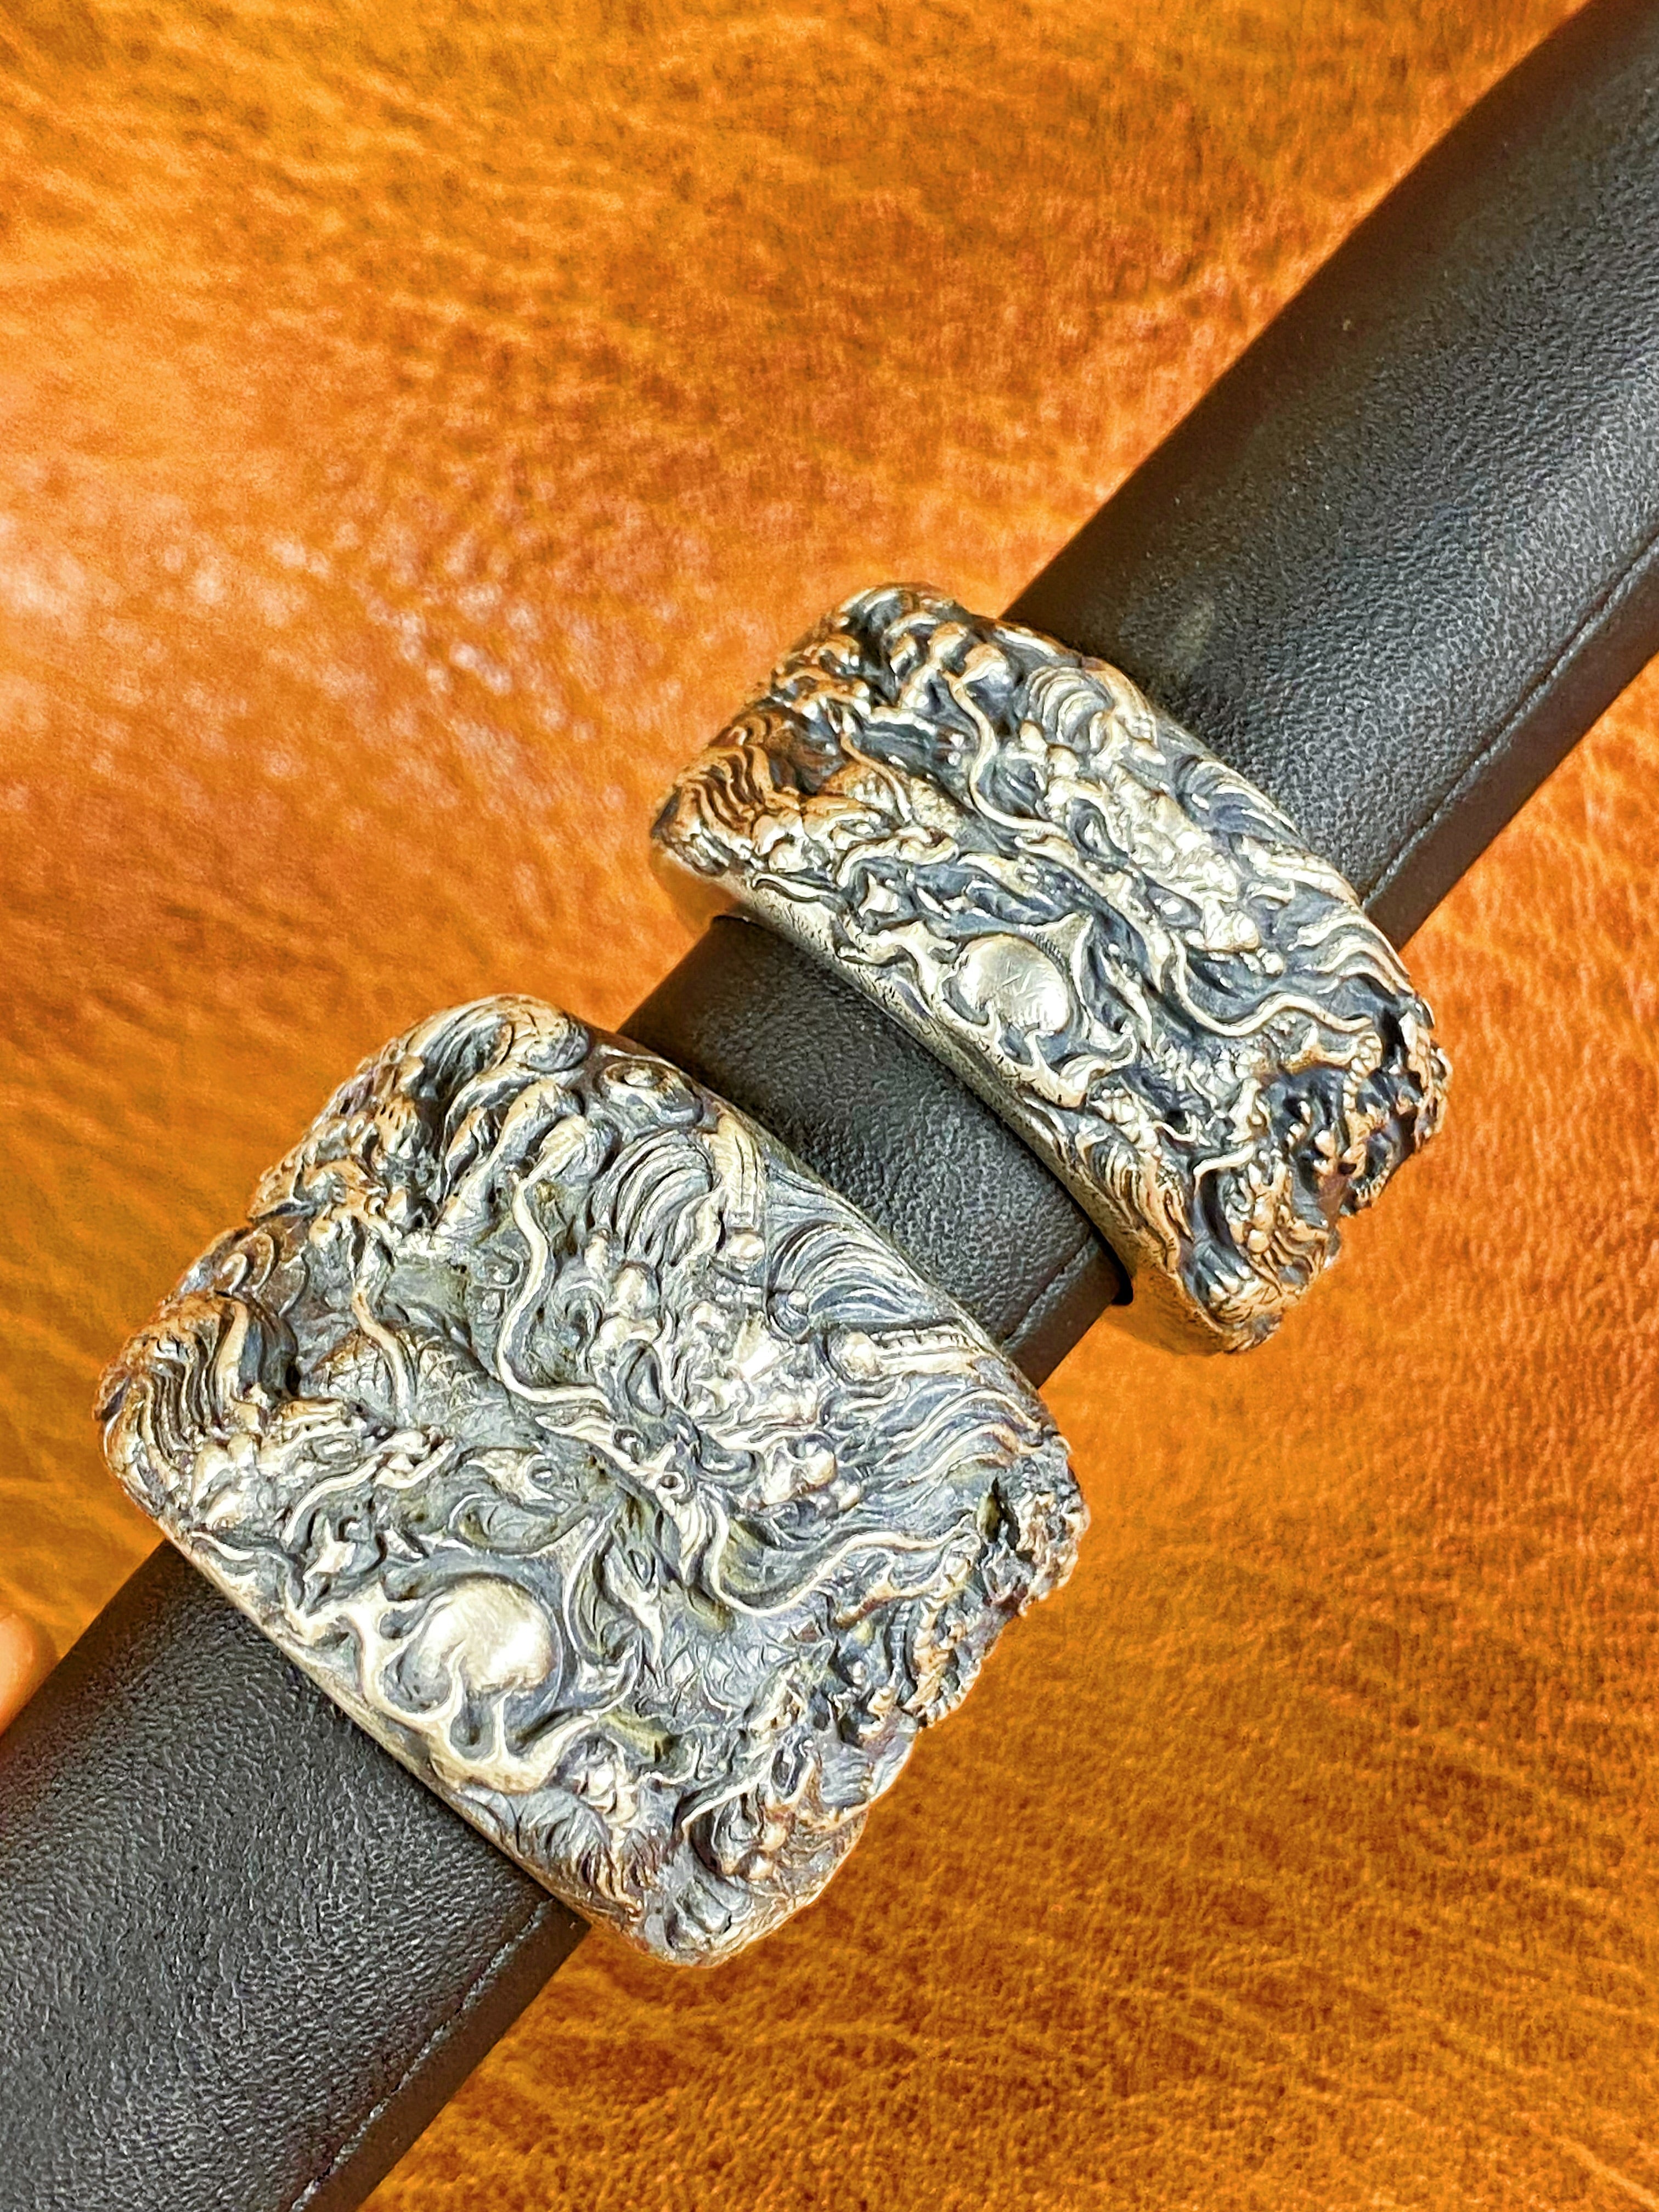 Nine Dragon Silver Ring (Item No. R0125)